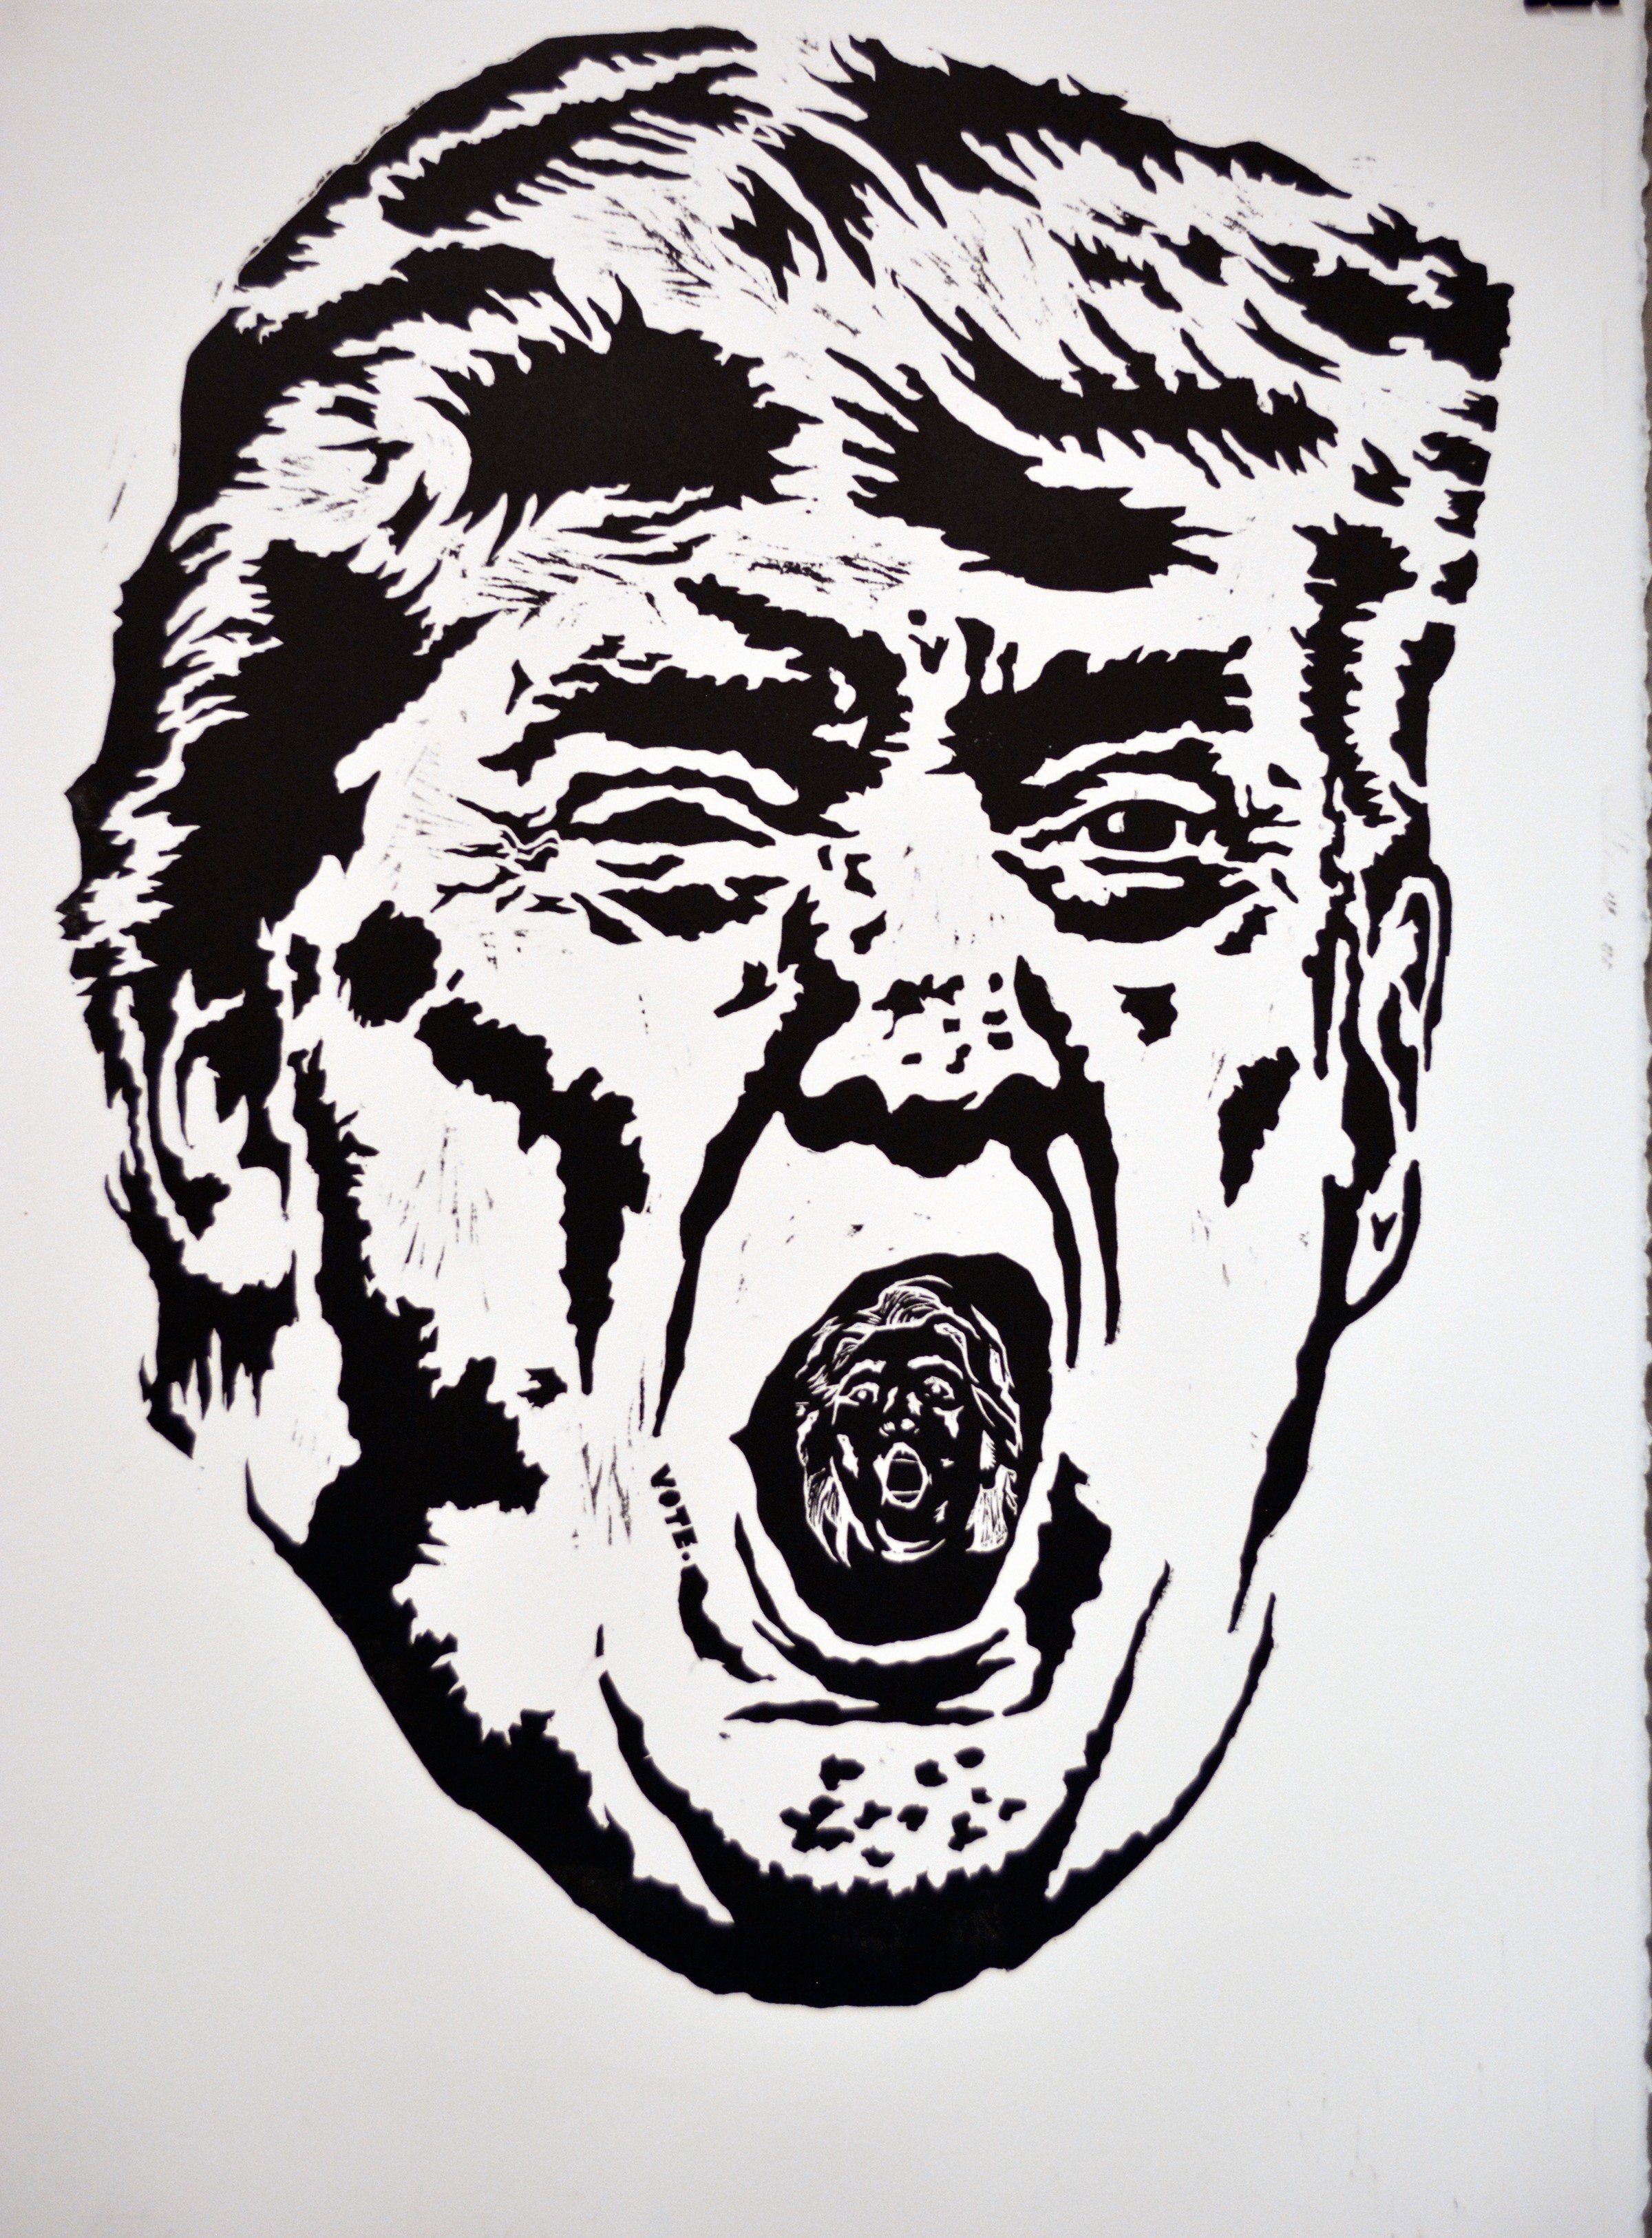 Trump poster